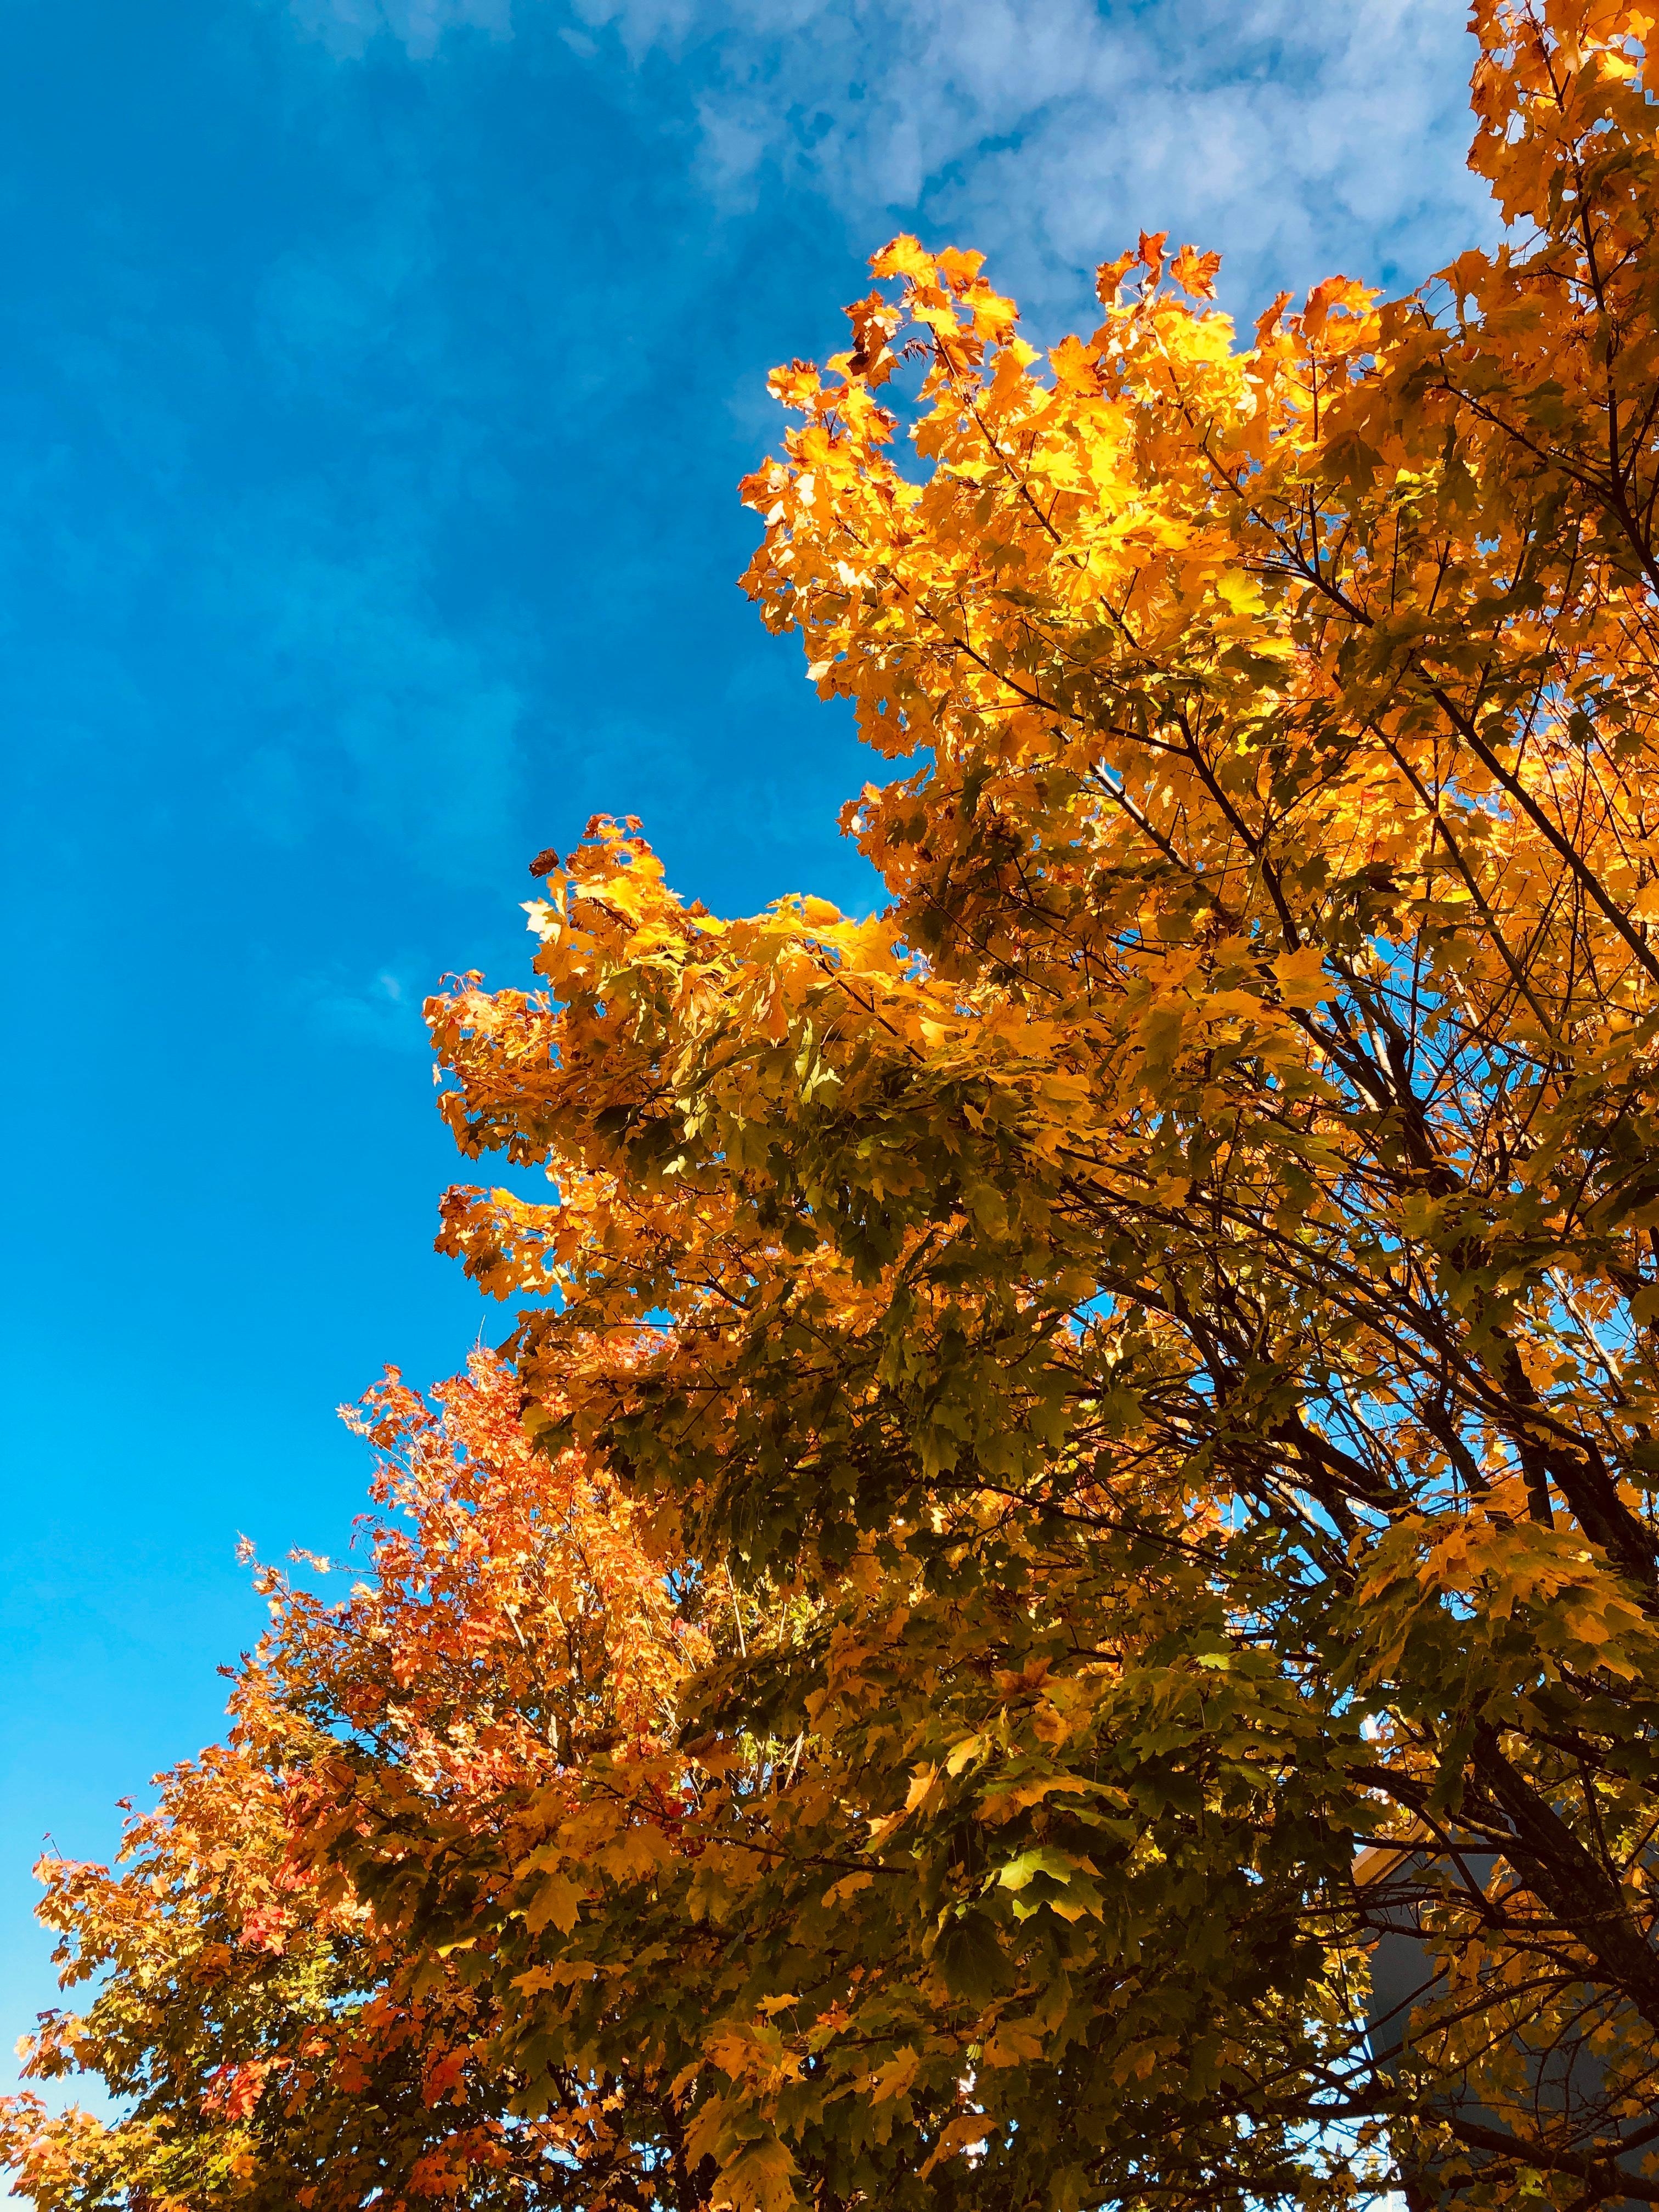 La terre est bleue comme une orange. 
#autumn #forevermyfavouriteseason